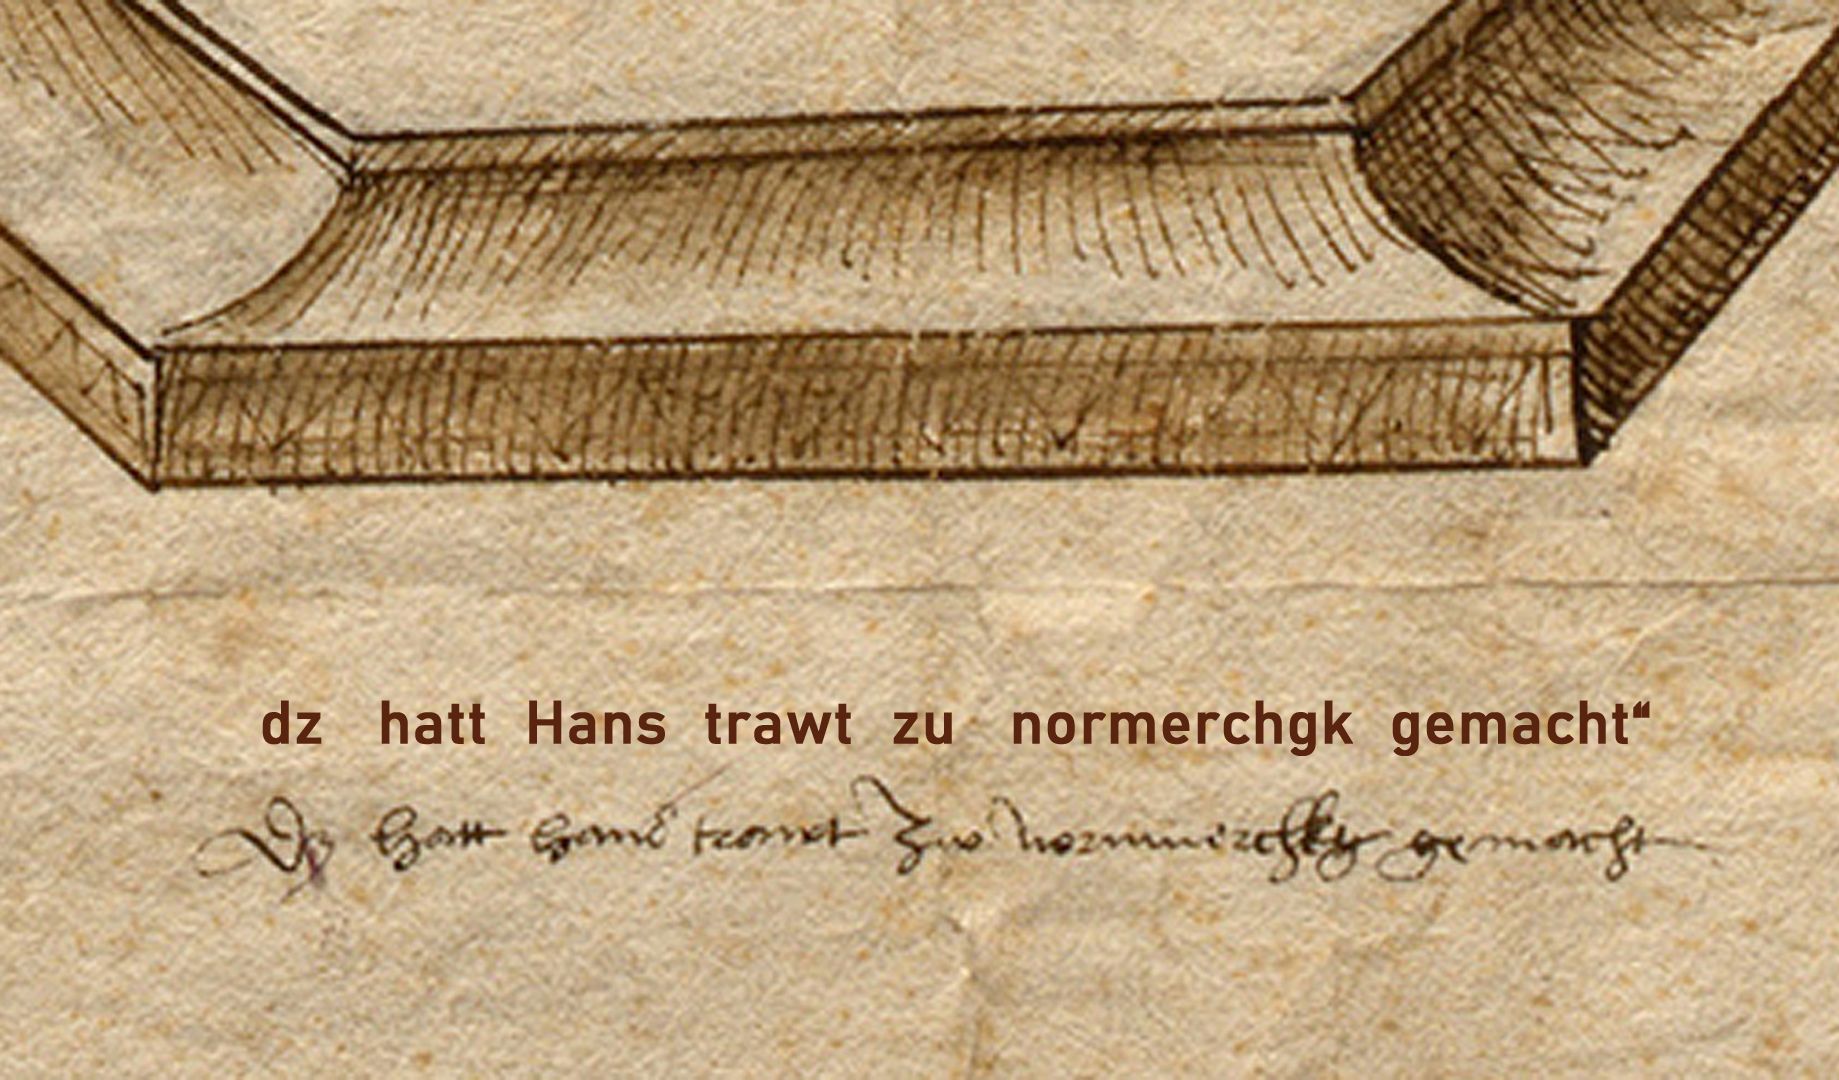 Sebastian - supposedly marked by Dürer with the note “Dz hatt Hans trawt zw Nornmerchkg made” -